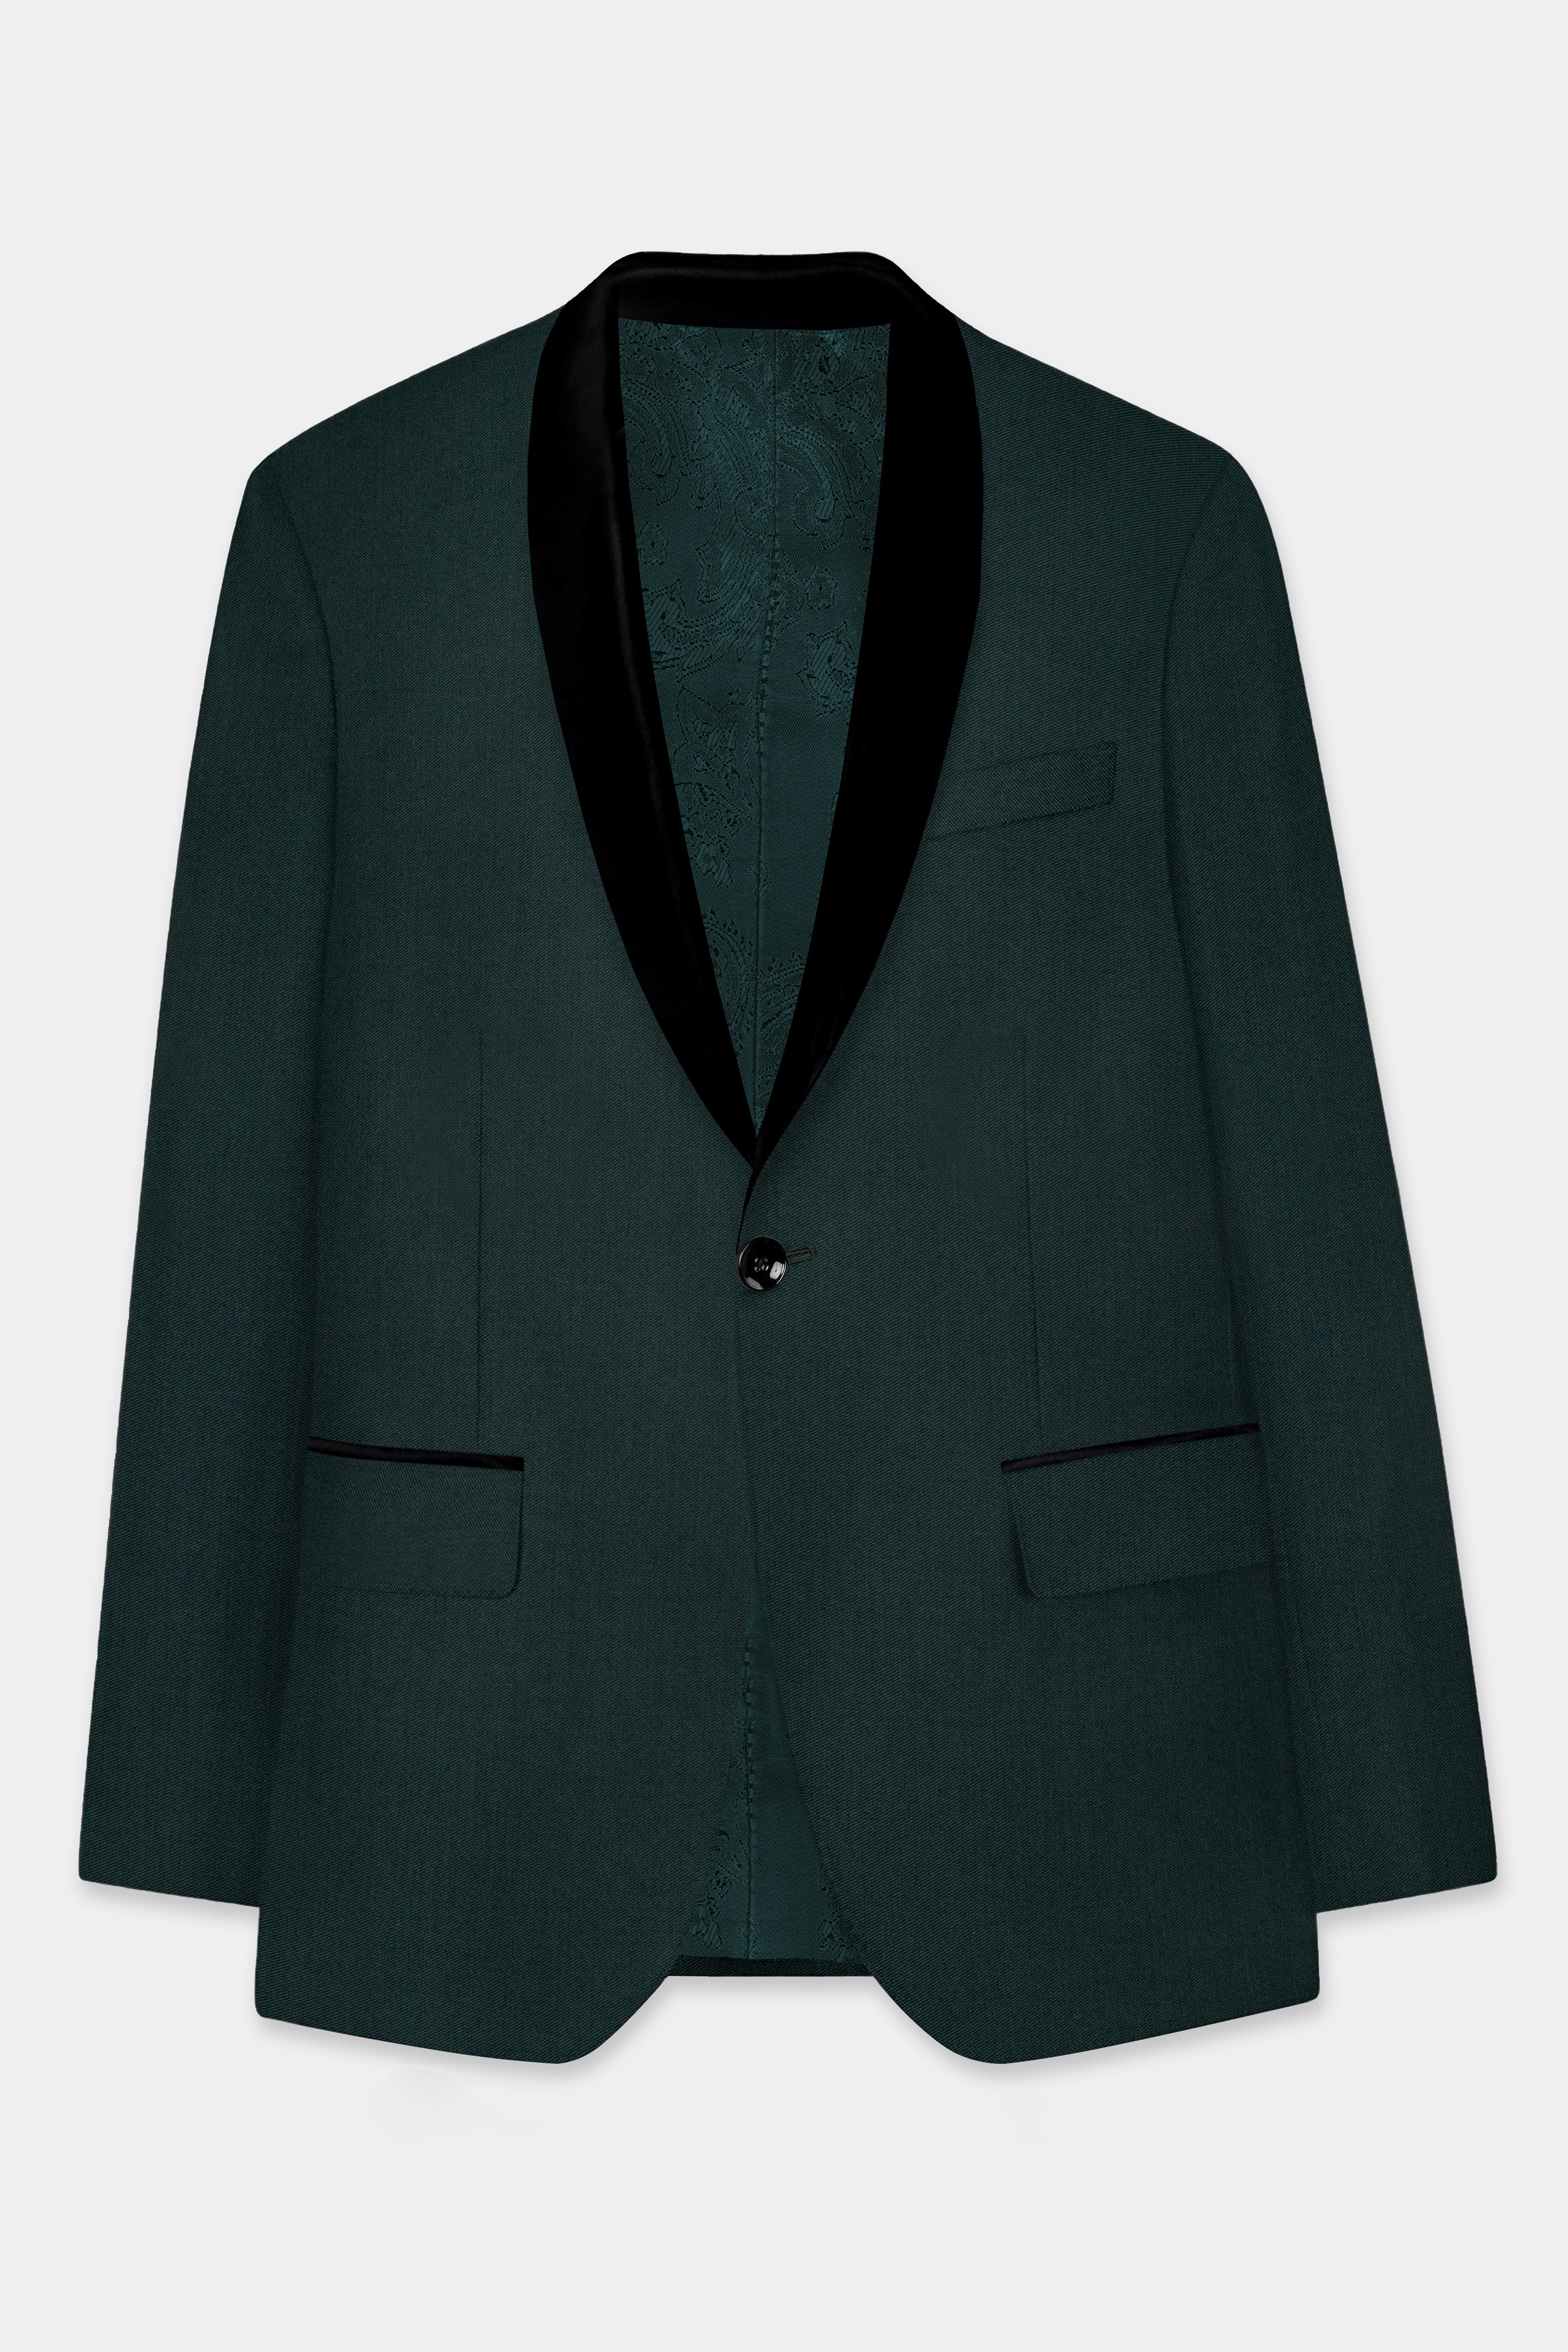 Timber Green Wool Rich Tuxedo Suit